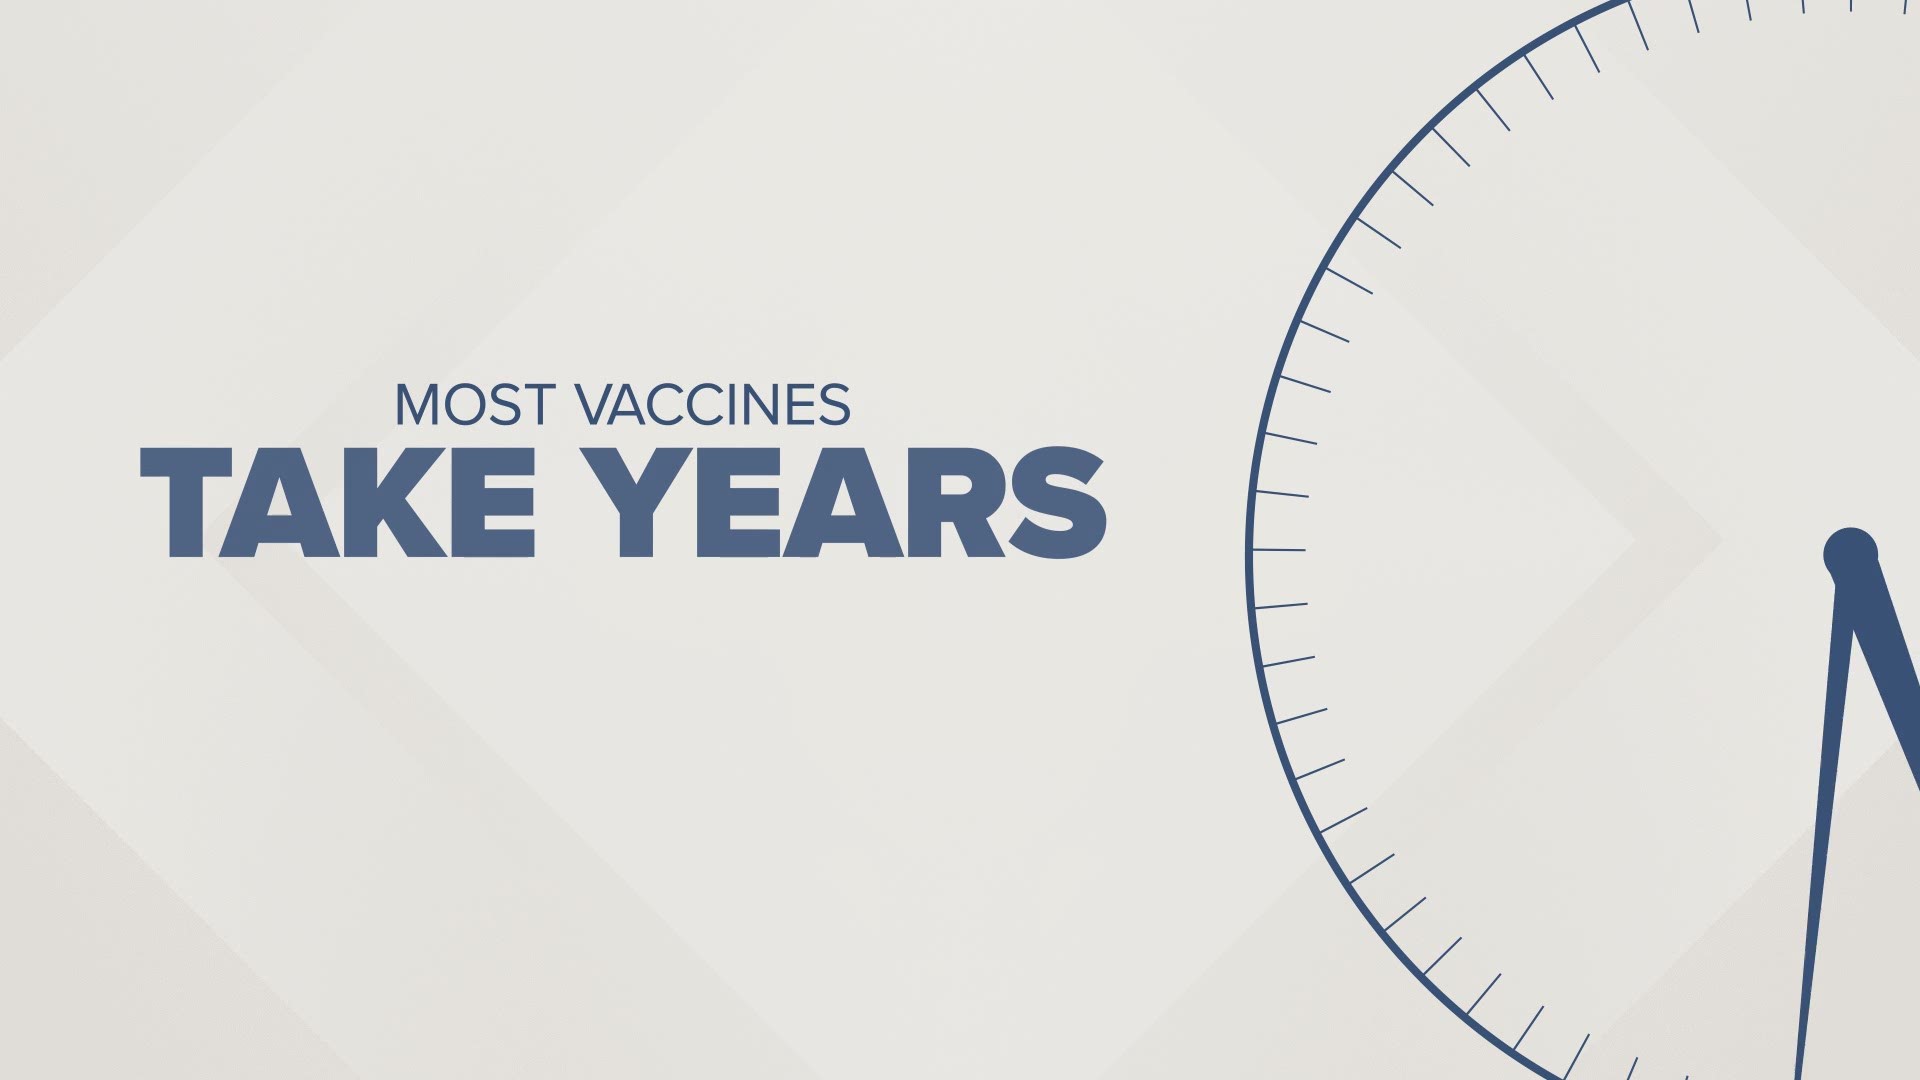 Studying previous coronaviruses gave scientists a head start on vaccine development.